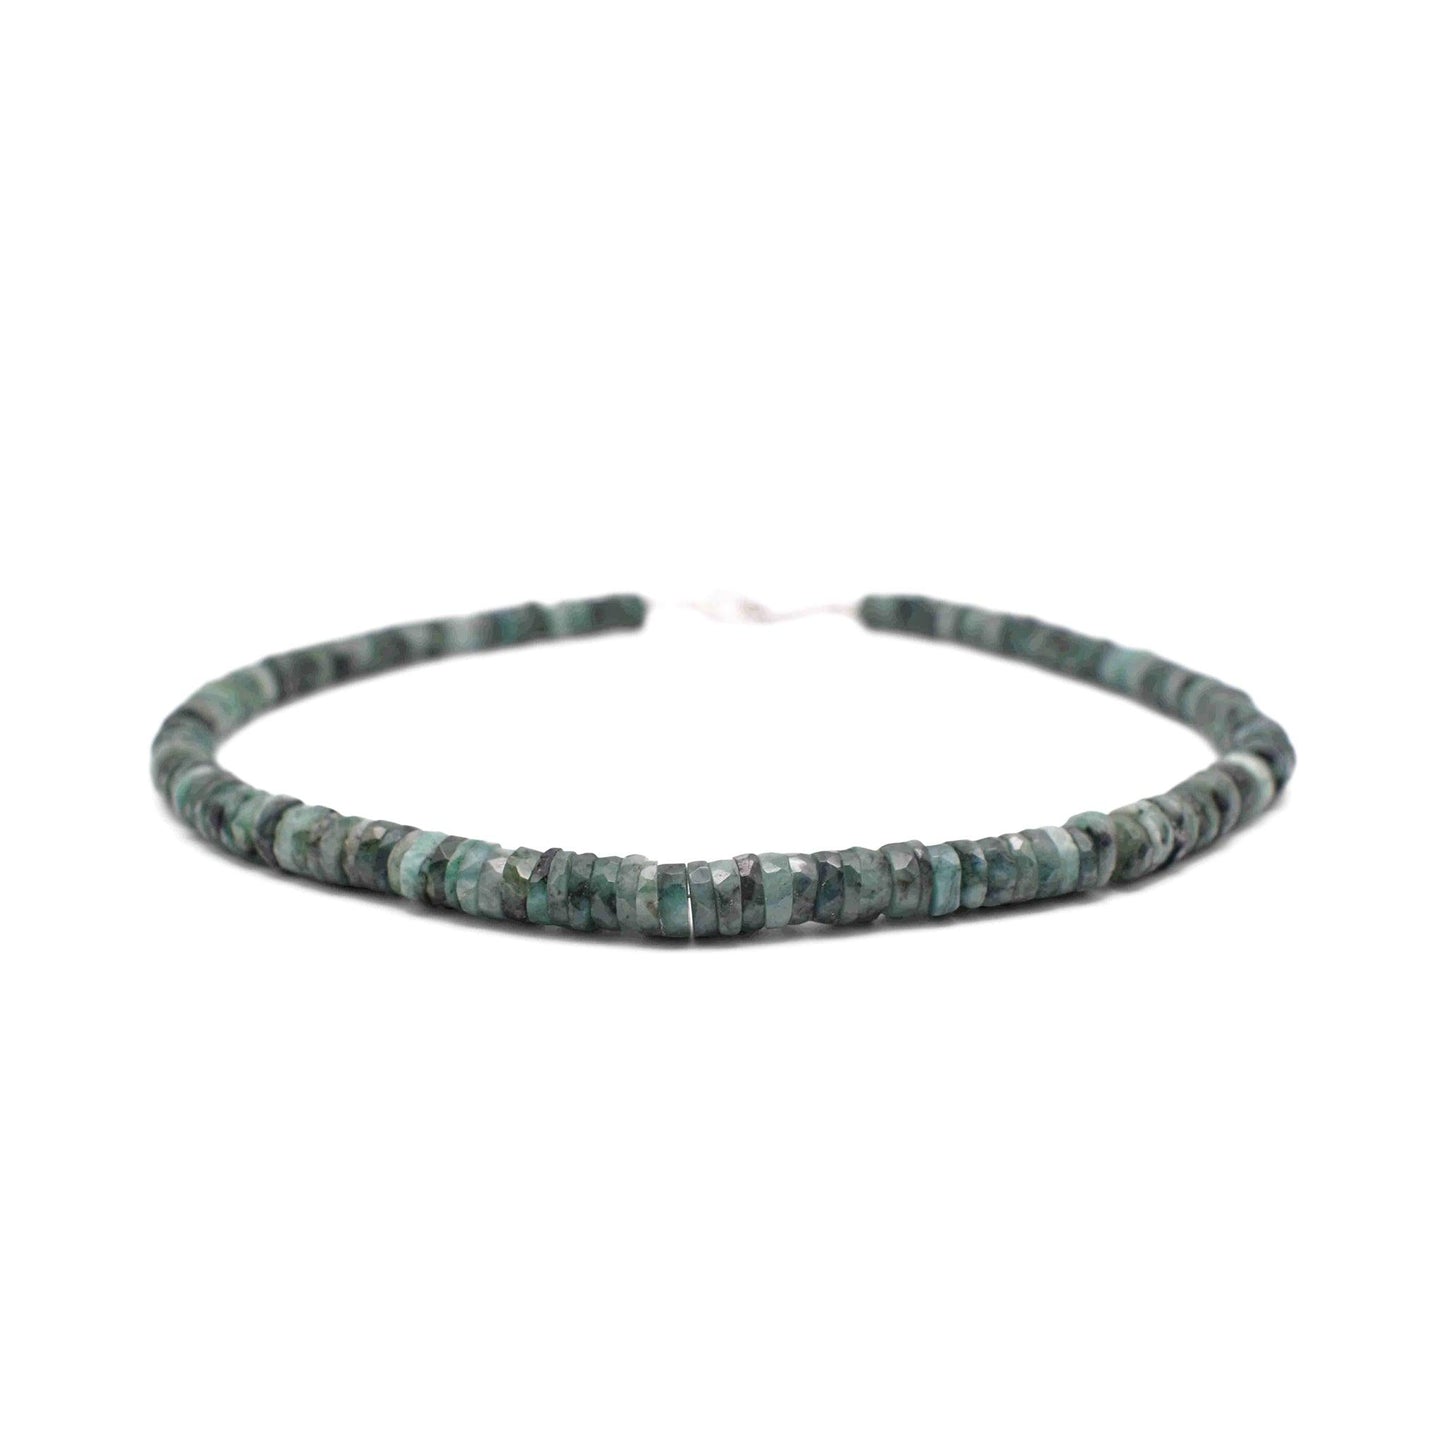 Emerald Faceted Cut Stone Necklace - Mystic Gleam